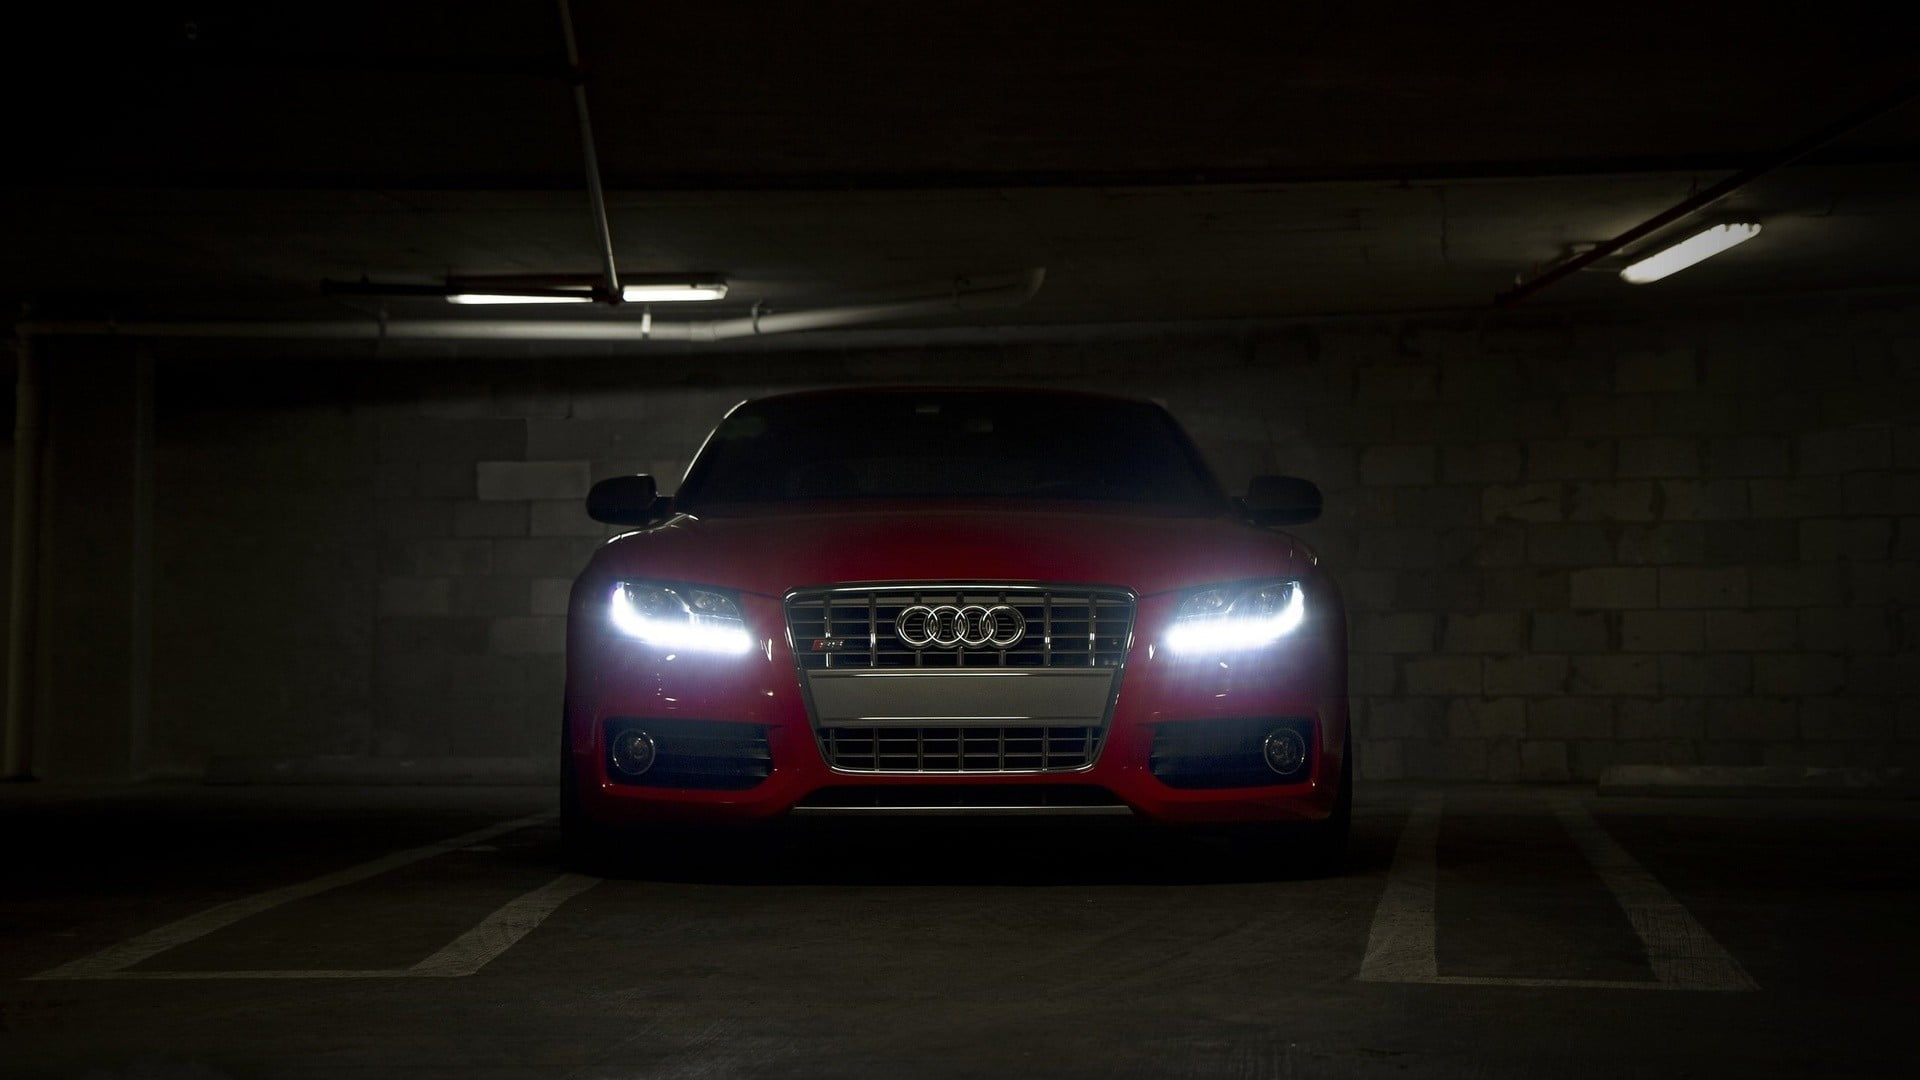 red Audi car, Audi